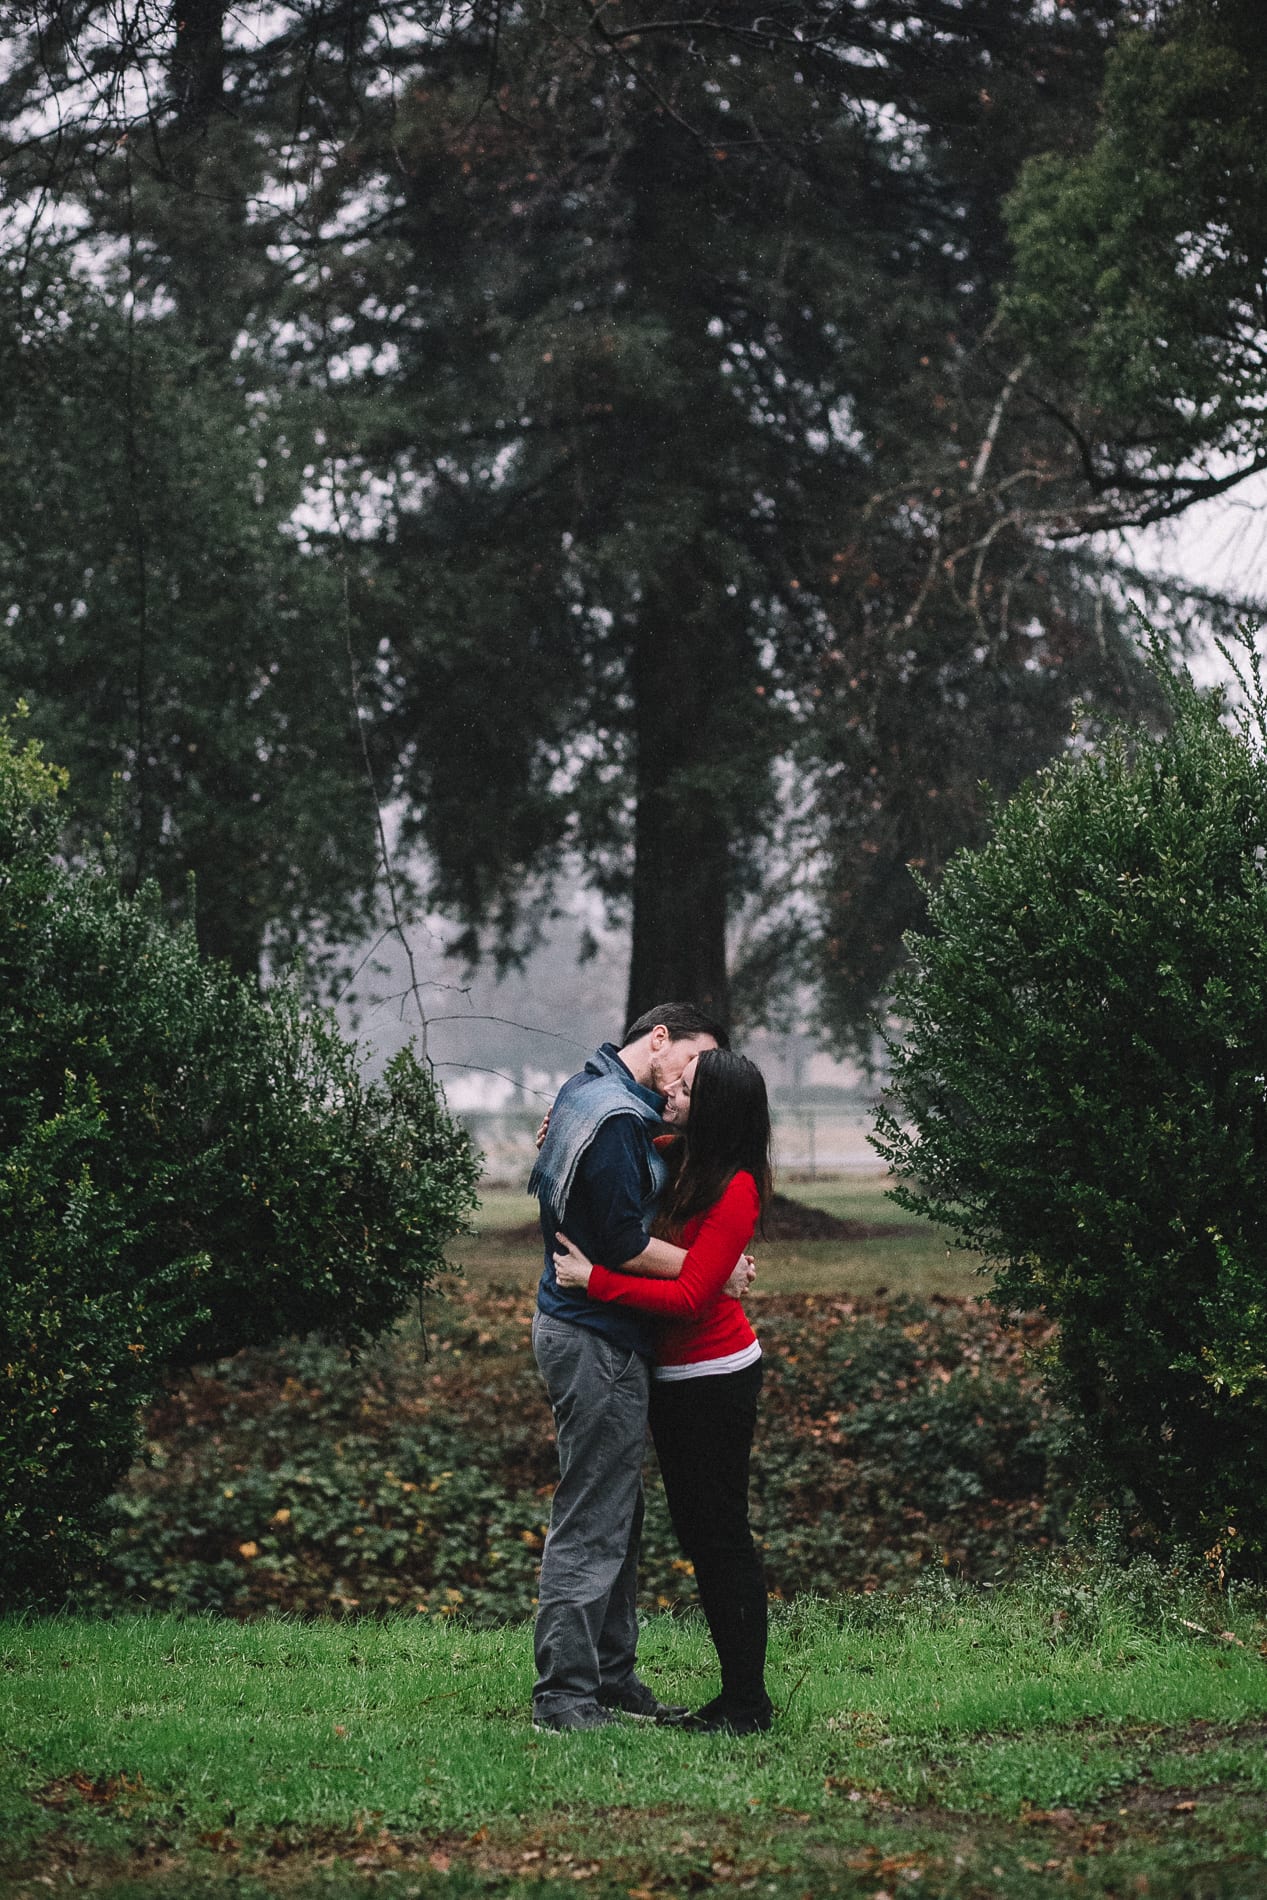 redding-caldwell-lake-park-gazebo-couples-photo-9